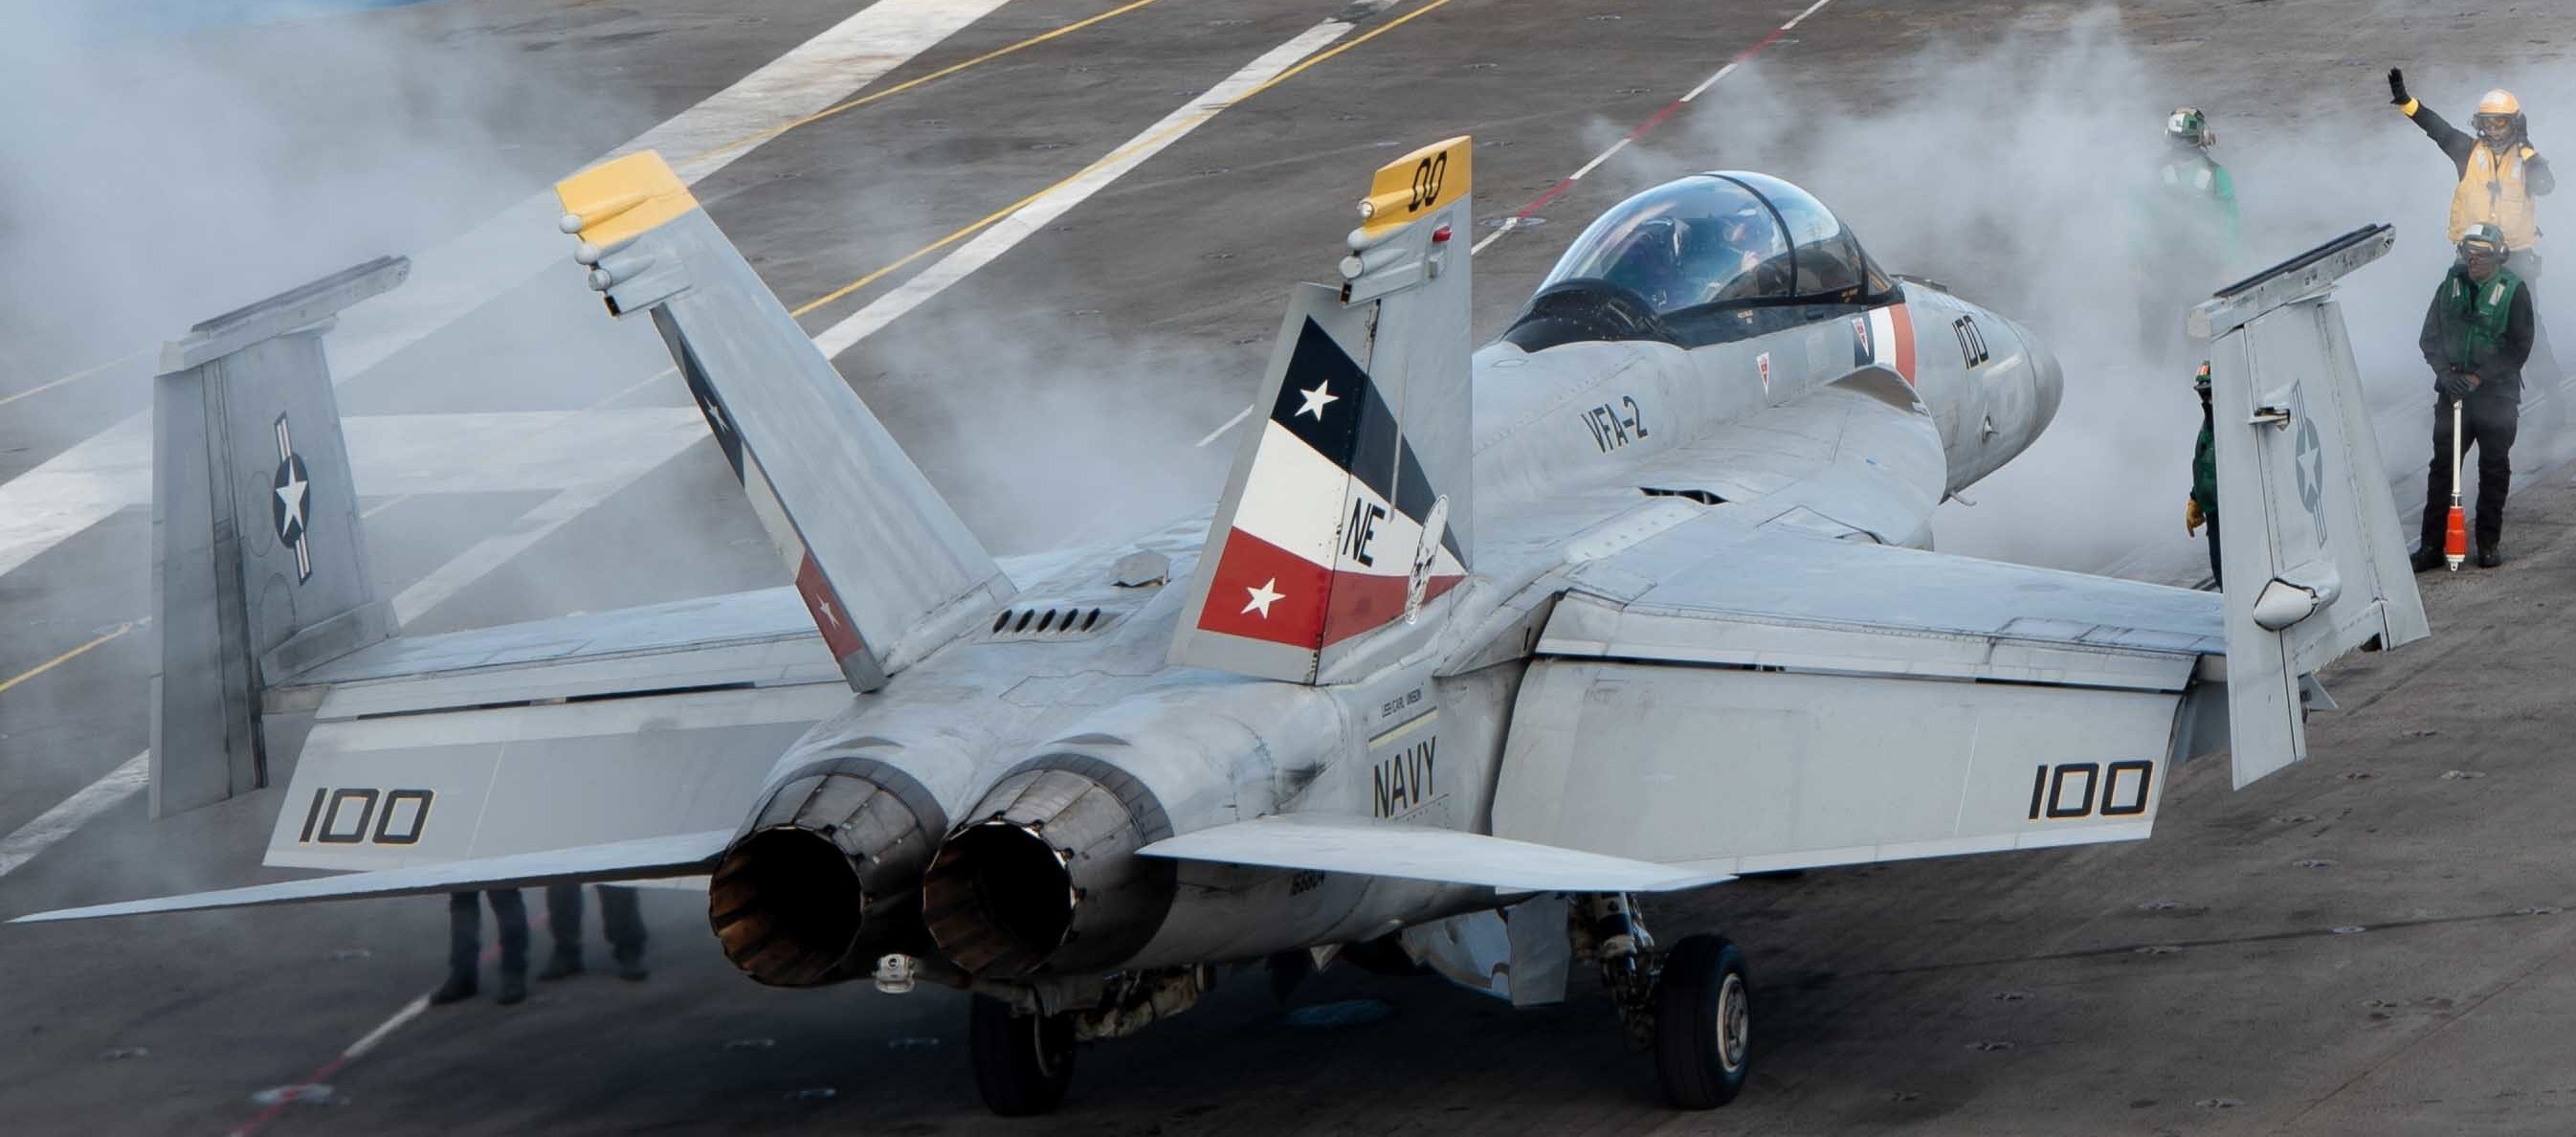 vfa-2 bounty hunters strike fighter squadron us navy f/a-18f super hornet carrier air wing cvw-2 uss carl vinson cvn-70 128